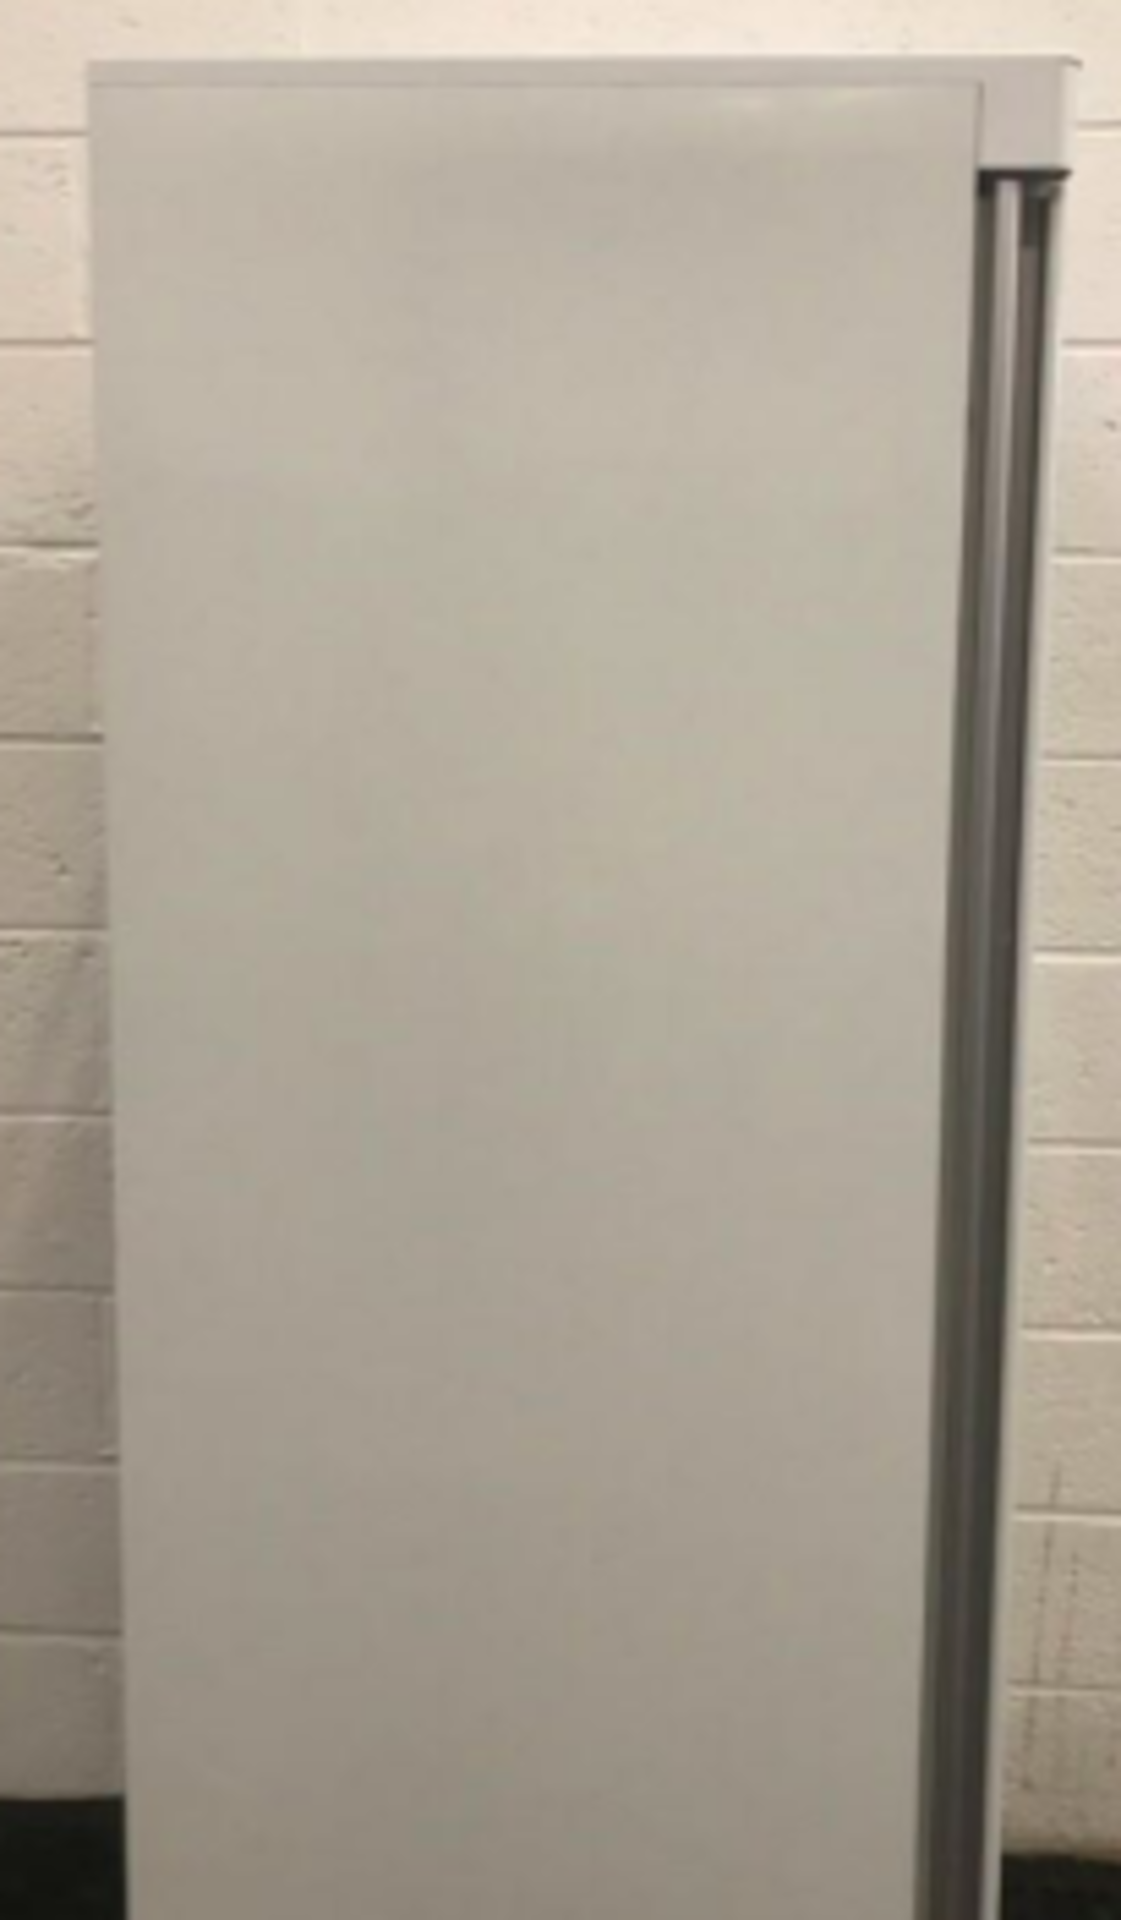 Compact refrigerator K 410 LG C 6W - Image 10 of 11